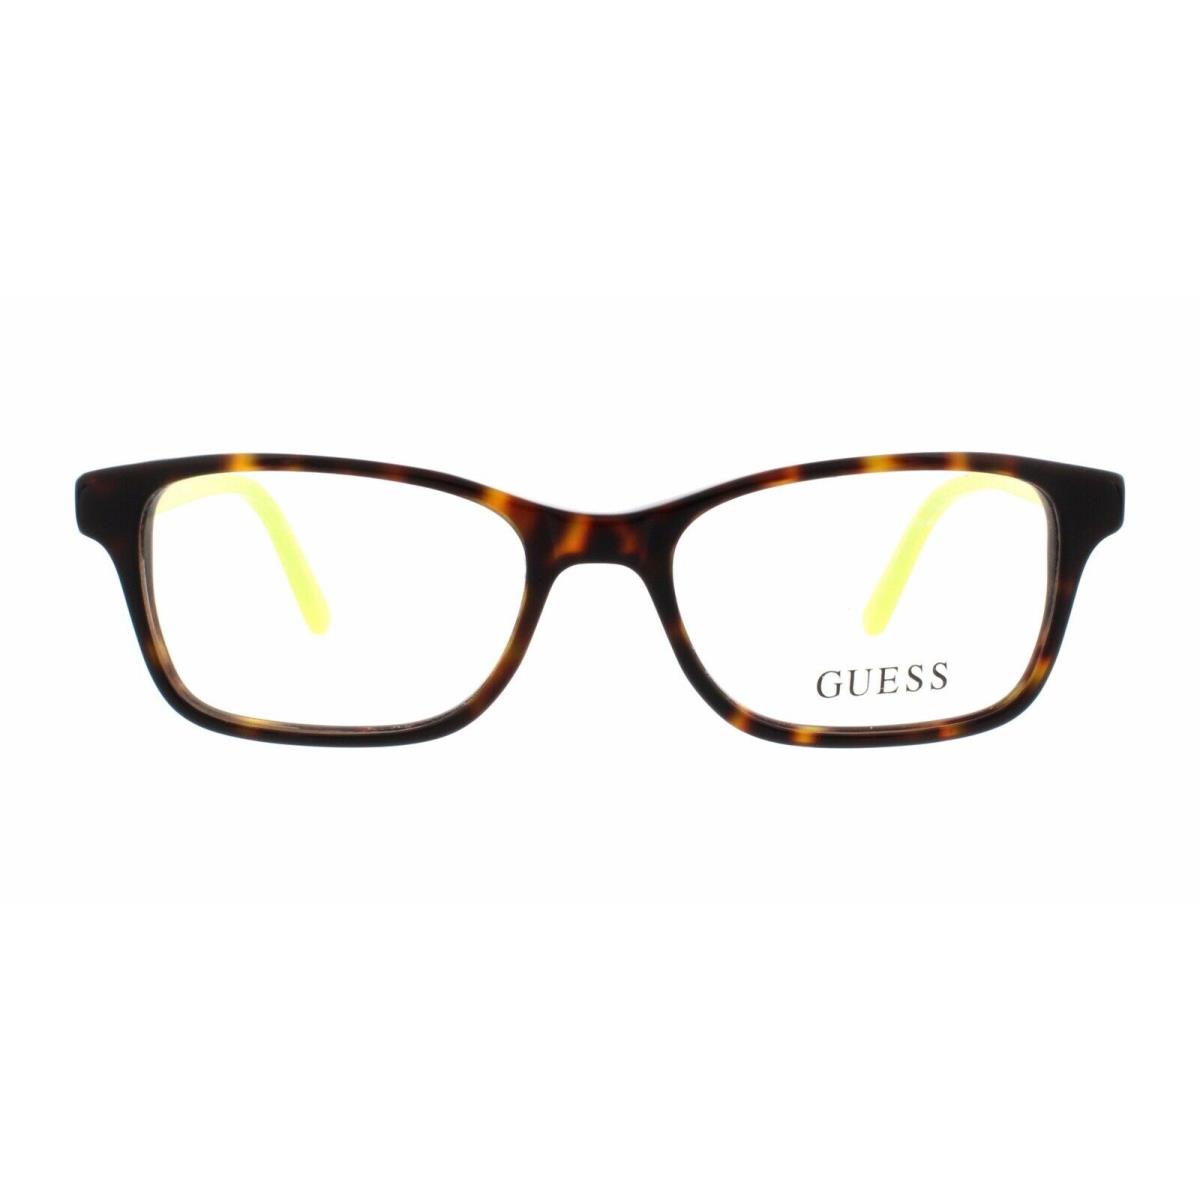 Guess GU 9131 Tortoise/yellow 056 Plastic Eyeglasses Frame 49-16-135 RX - Tortoise/Yellow 056, Frame: , Lens: